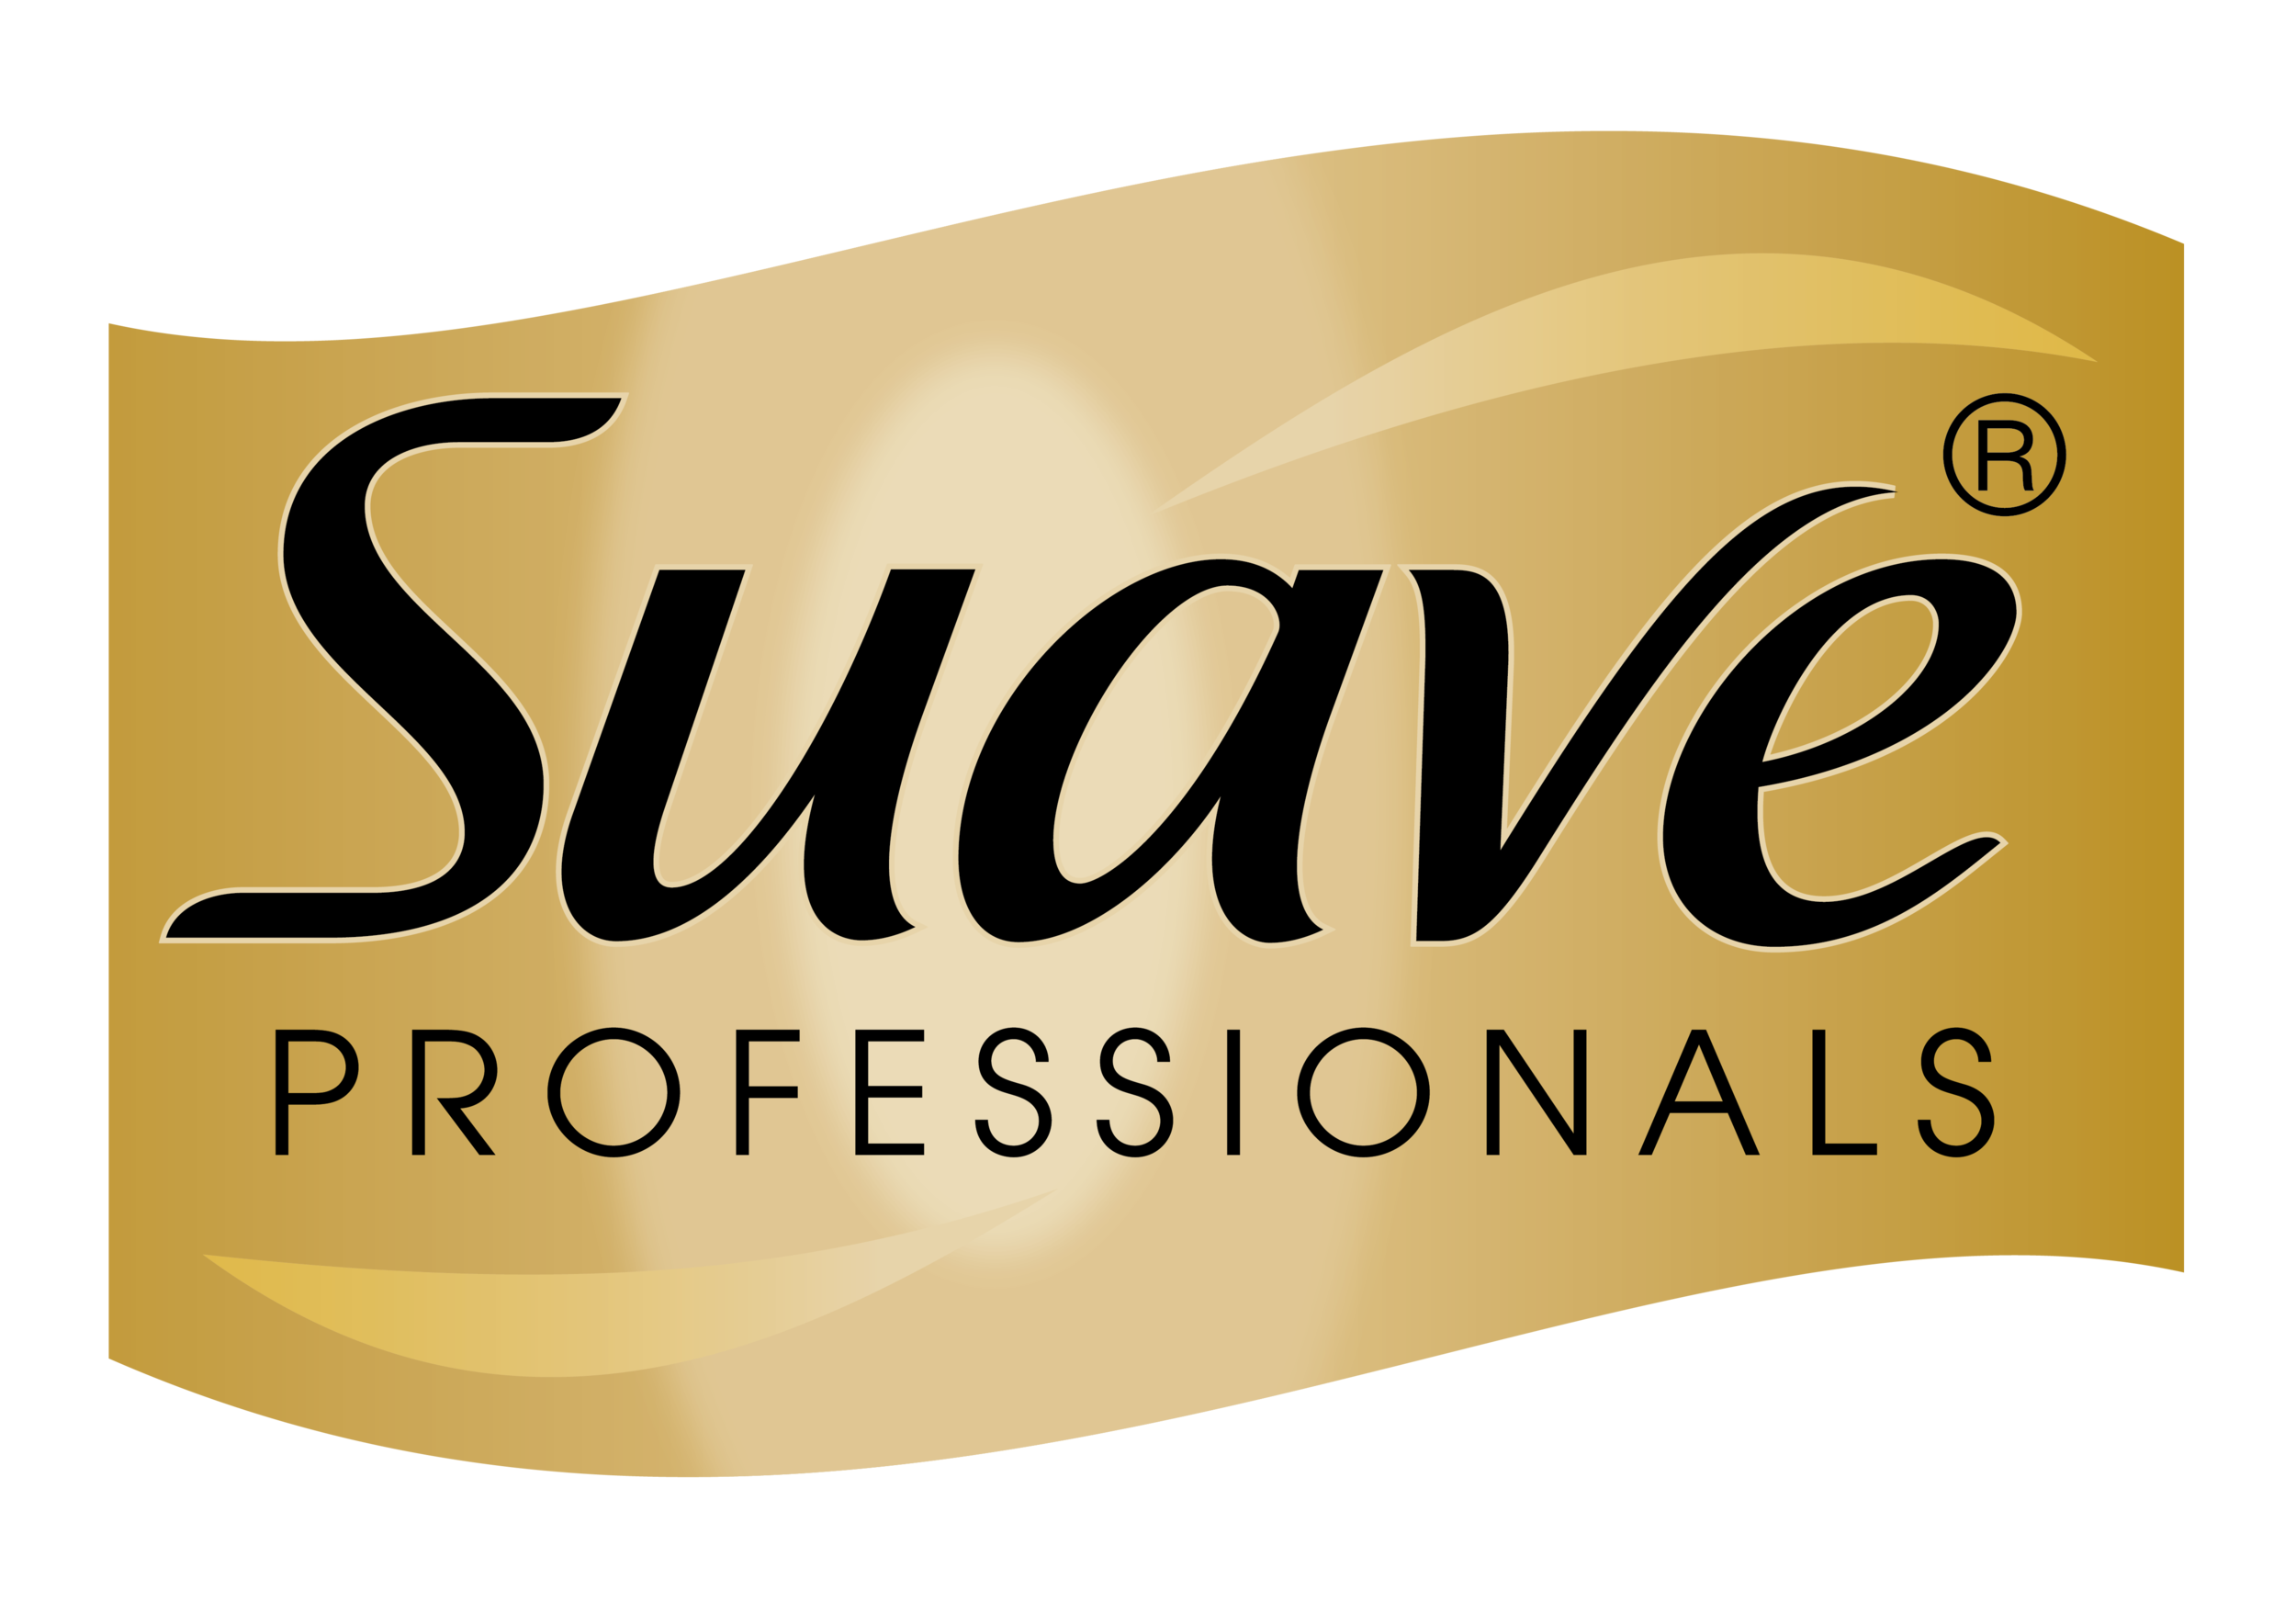 Suave Professionals Logo.png